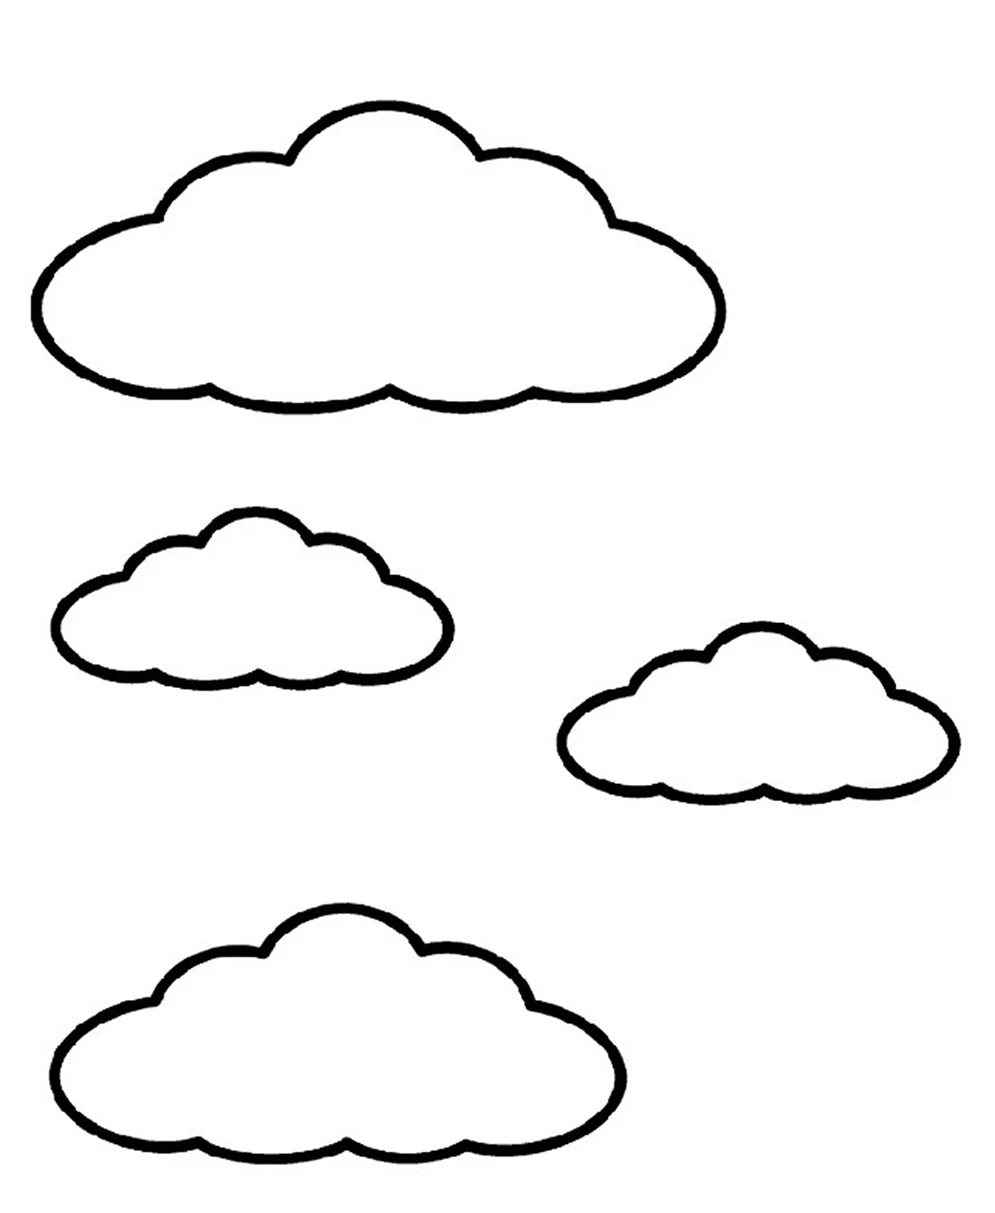 Рисунки для срисовки облако. Для срисовки